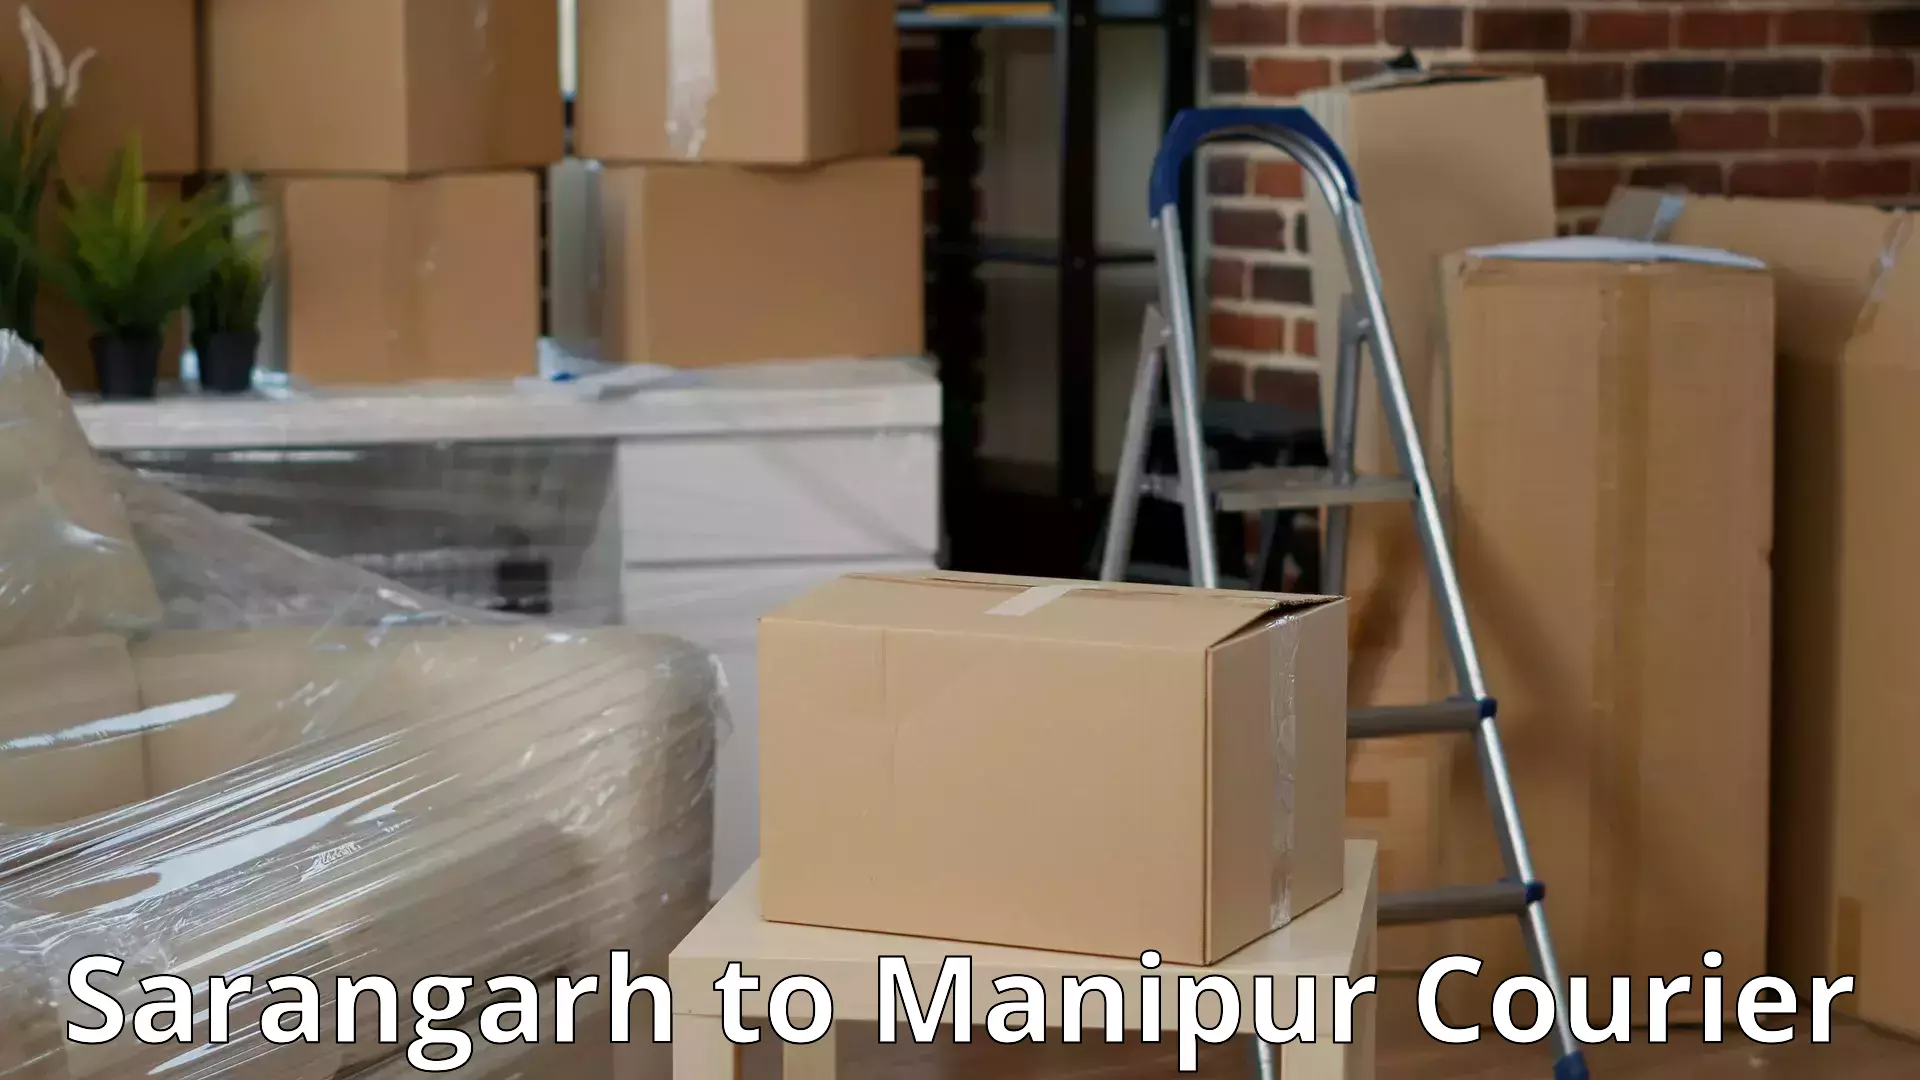 Cost-effective moving options Sarangarh to Thoubal